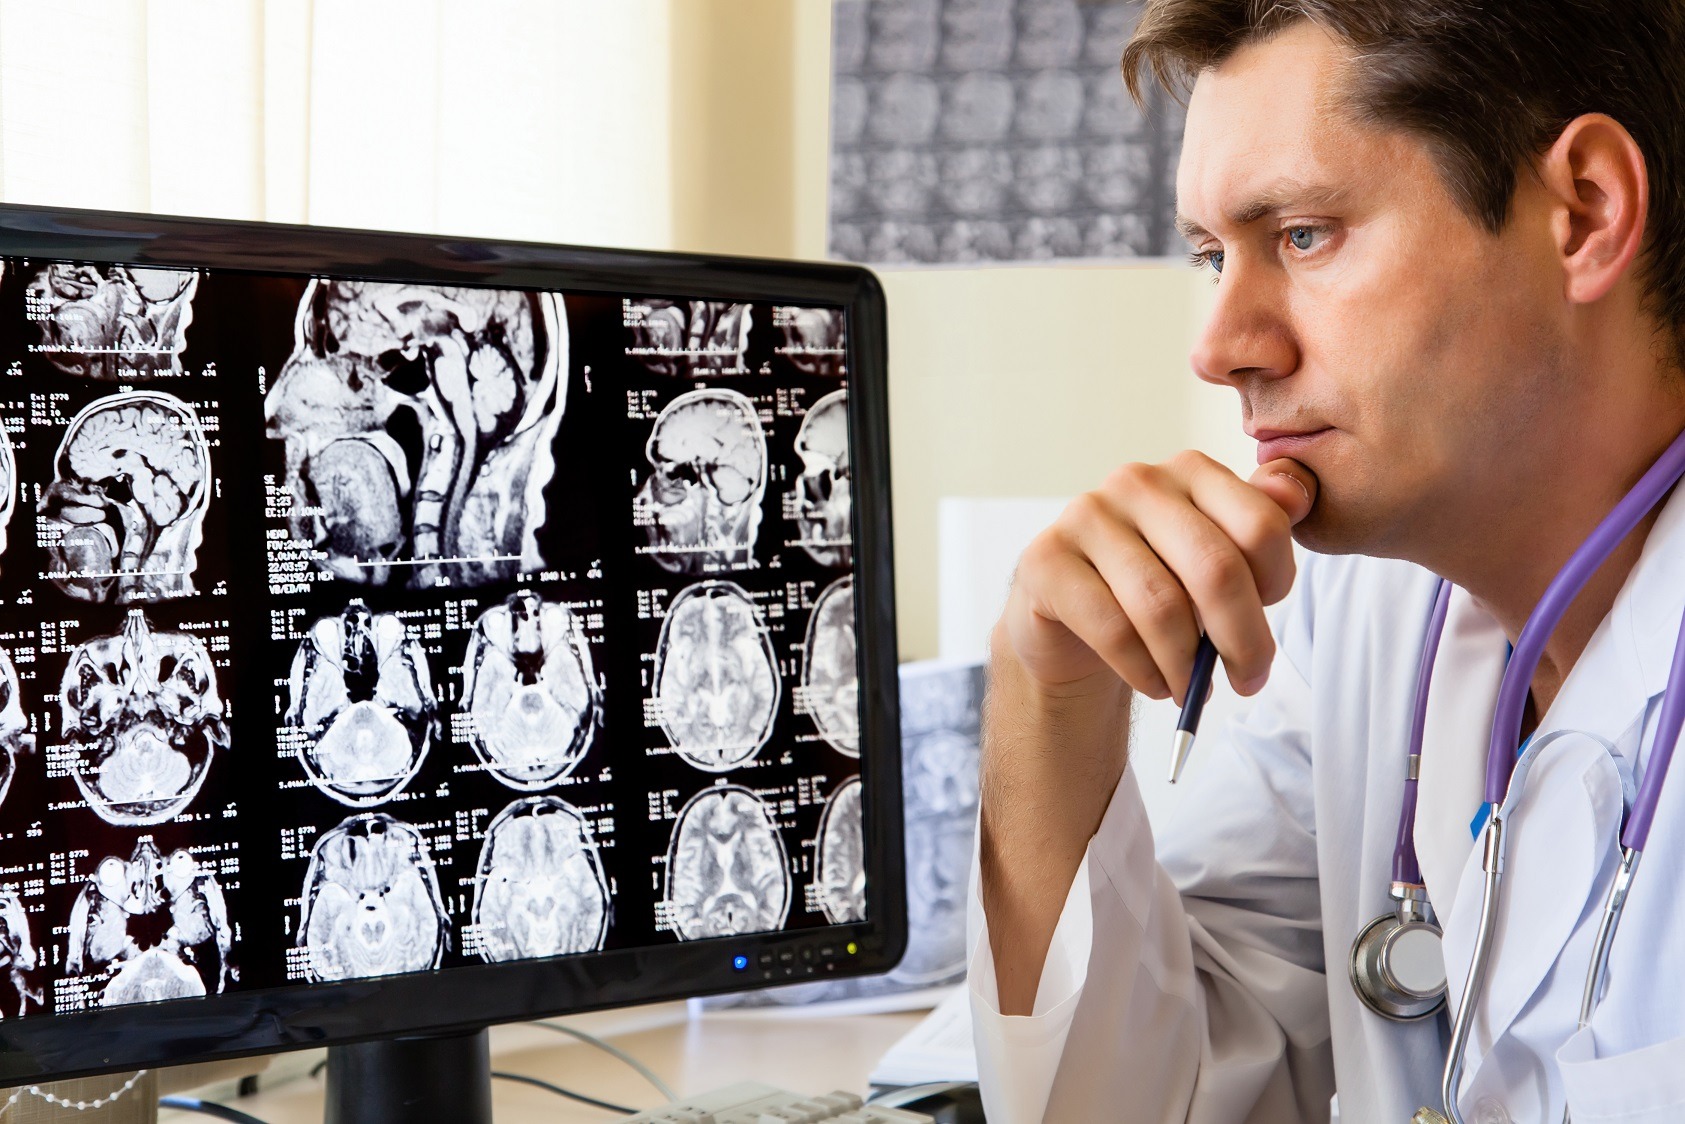 Medic neurolog: „Peste 50% dintre pacientii cu accident vascular cerebral au exces ponderal”